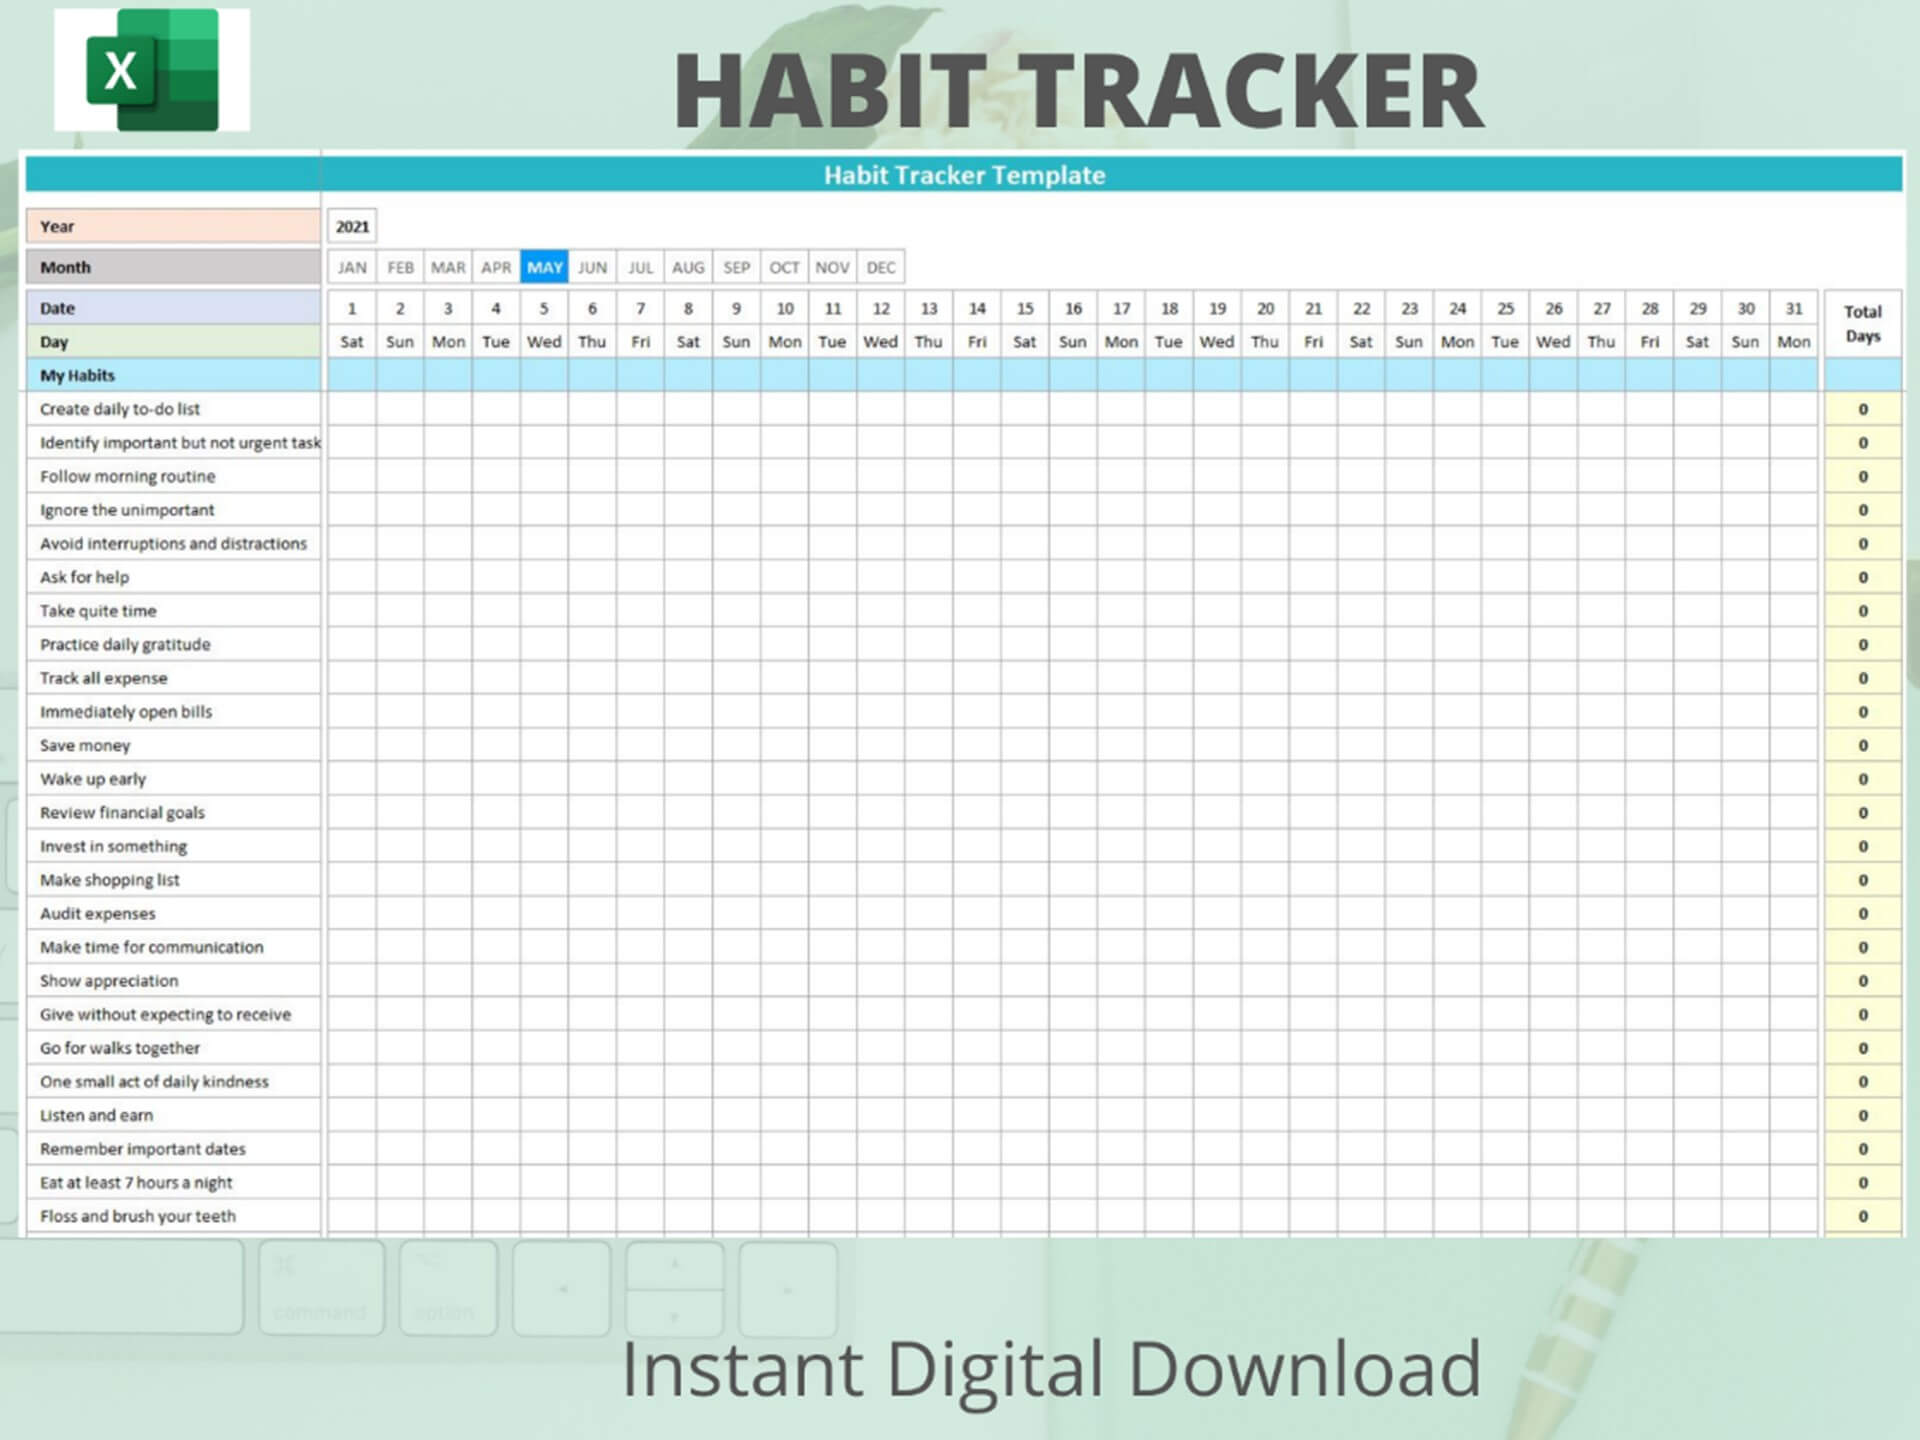 Dashboard Templates: Habit Tracker